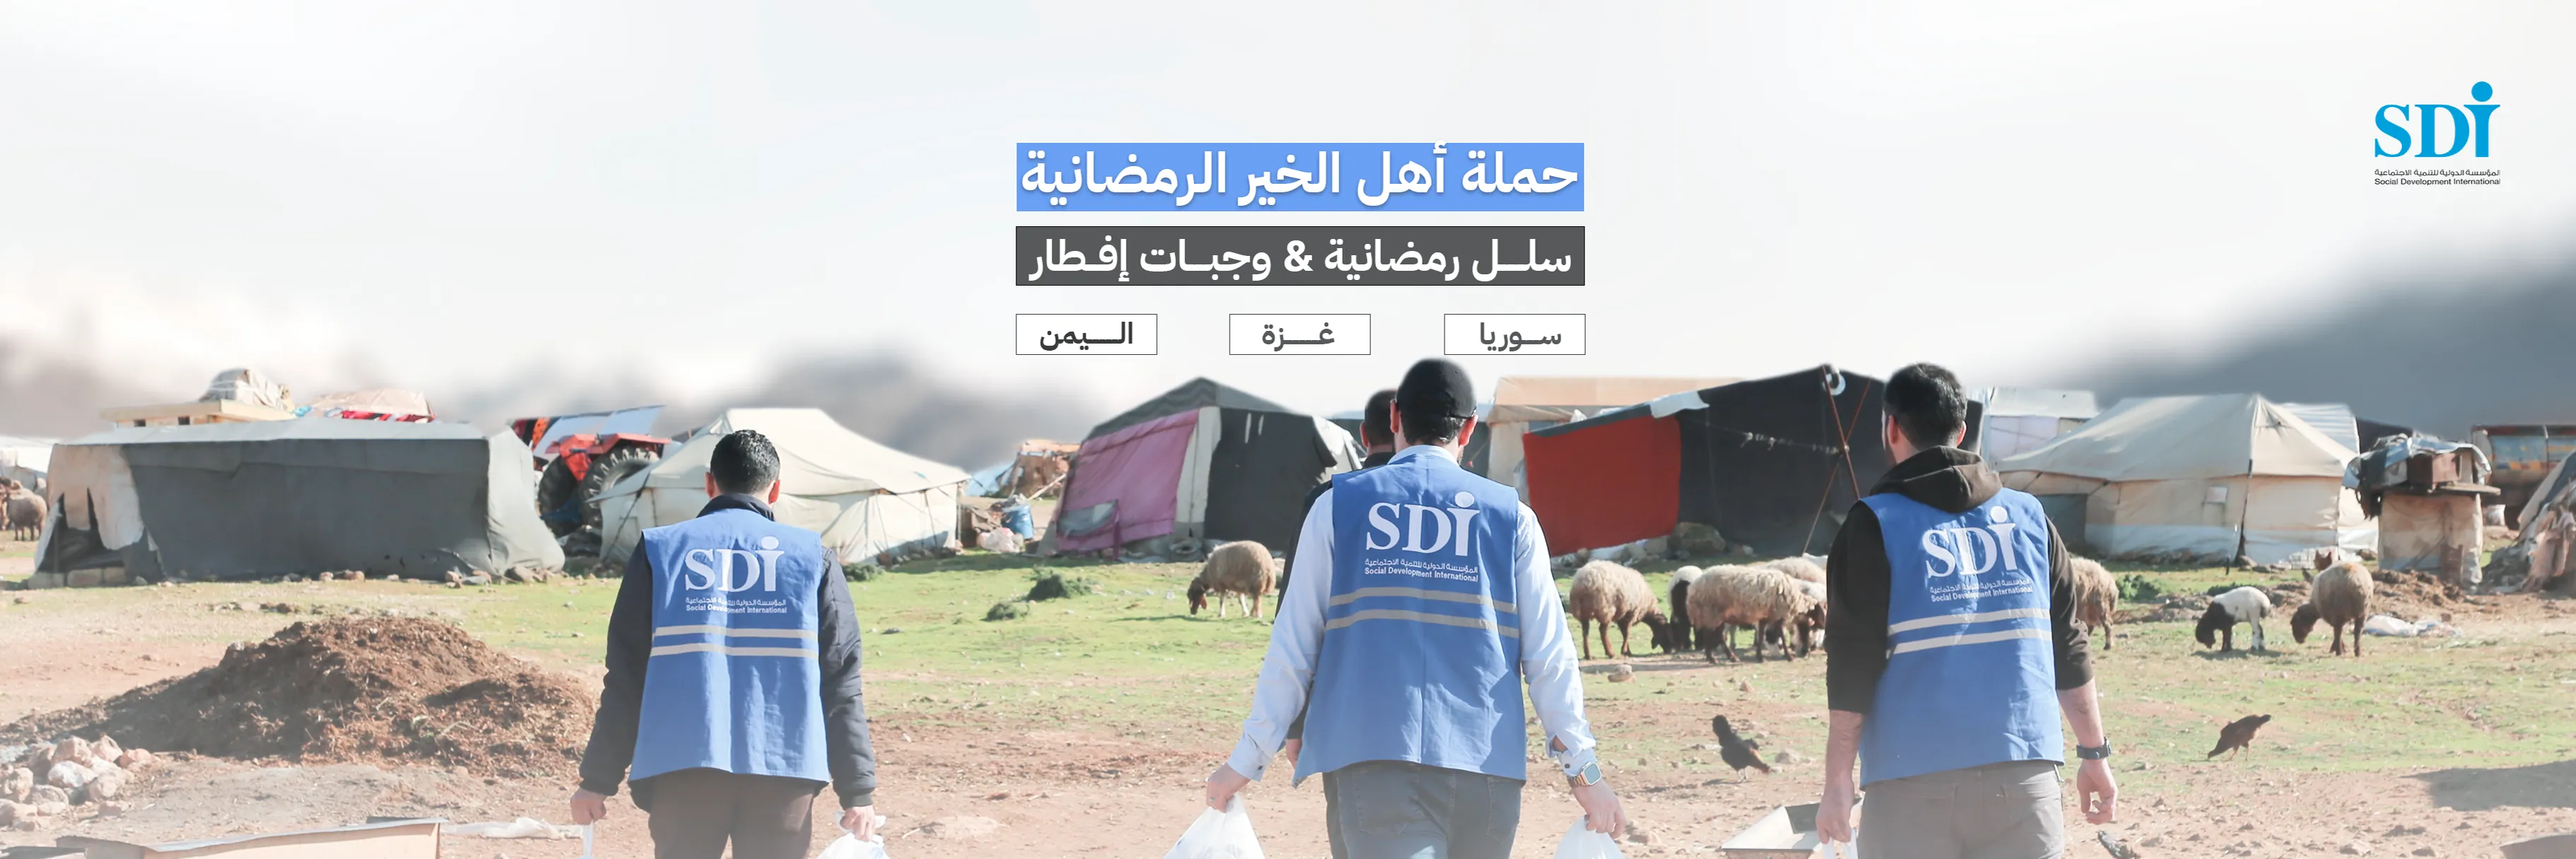 Social Development International (SDI)